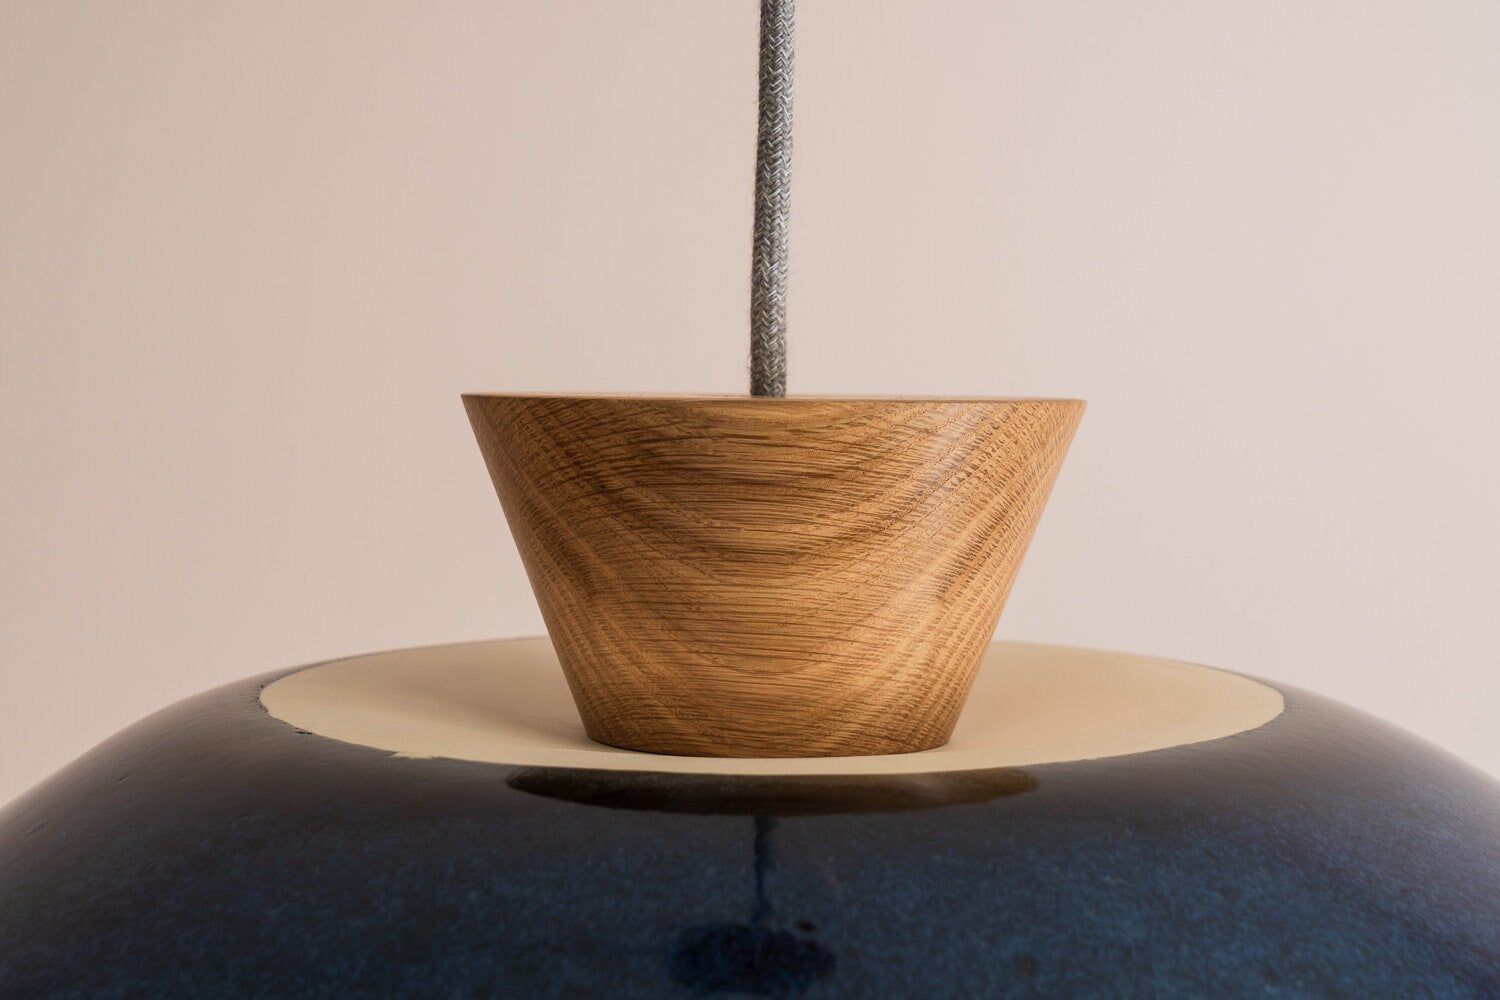 Blue XL Dawn Pendant Light in Ceramic and Oak by StudioHaran